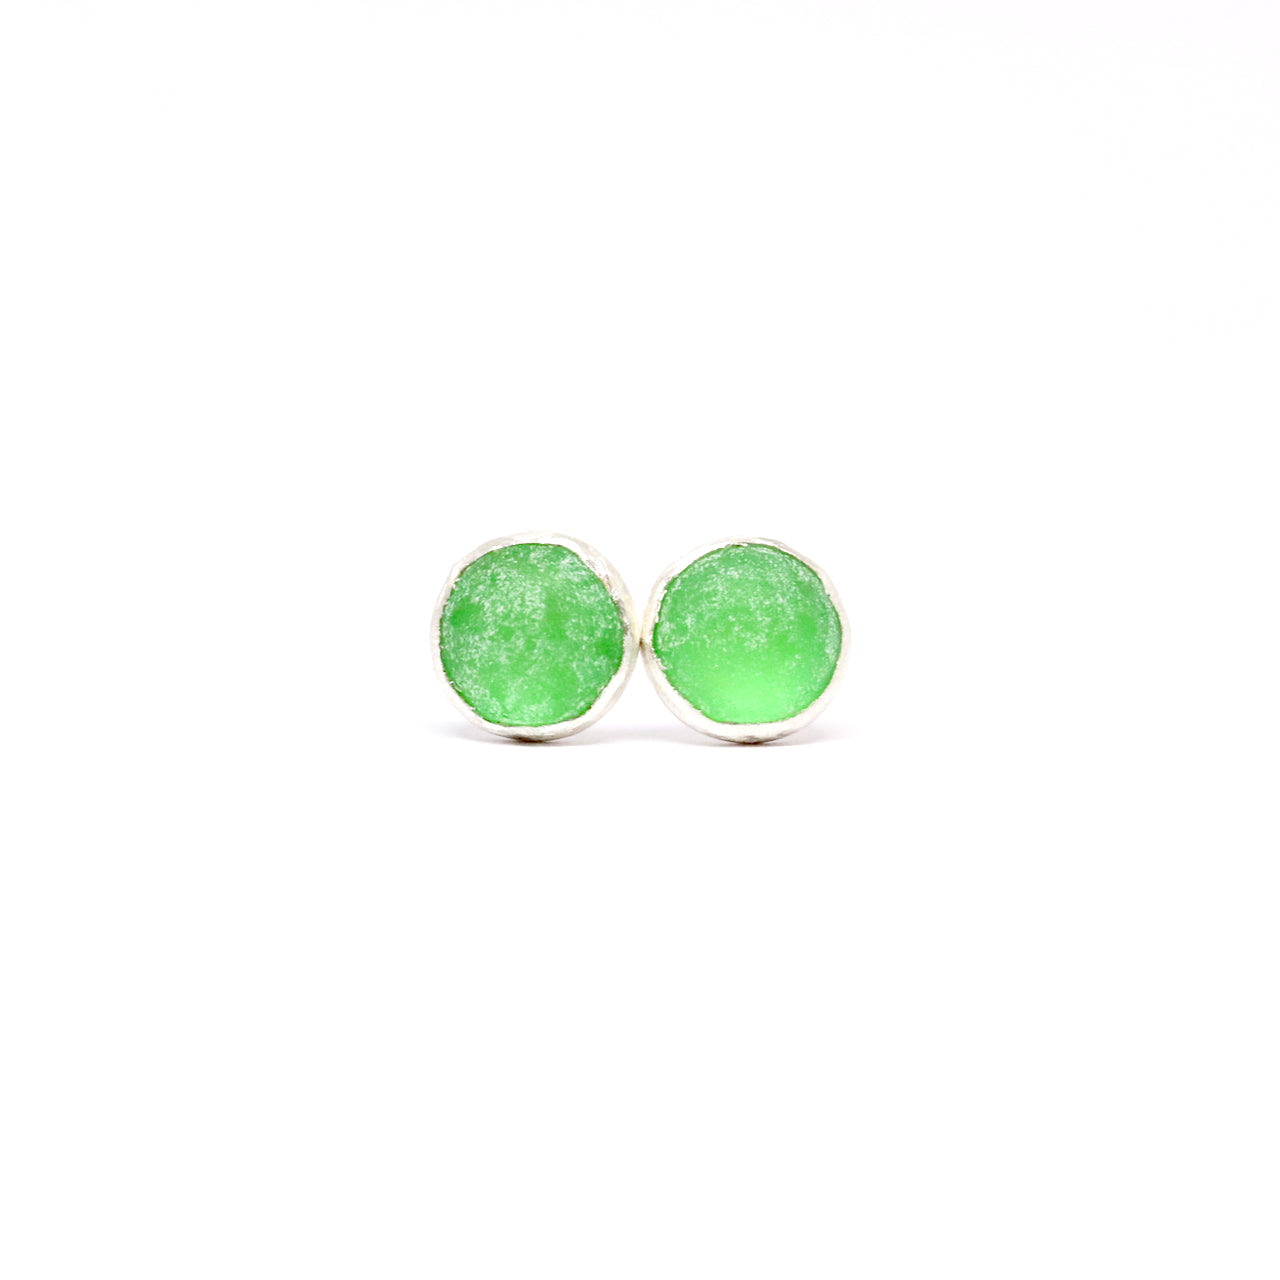 Green stud earrings. Hand made jewellery by Wānaka artist and jeweller Briar Hardy-Hesson.